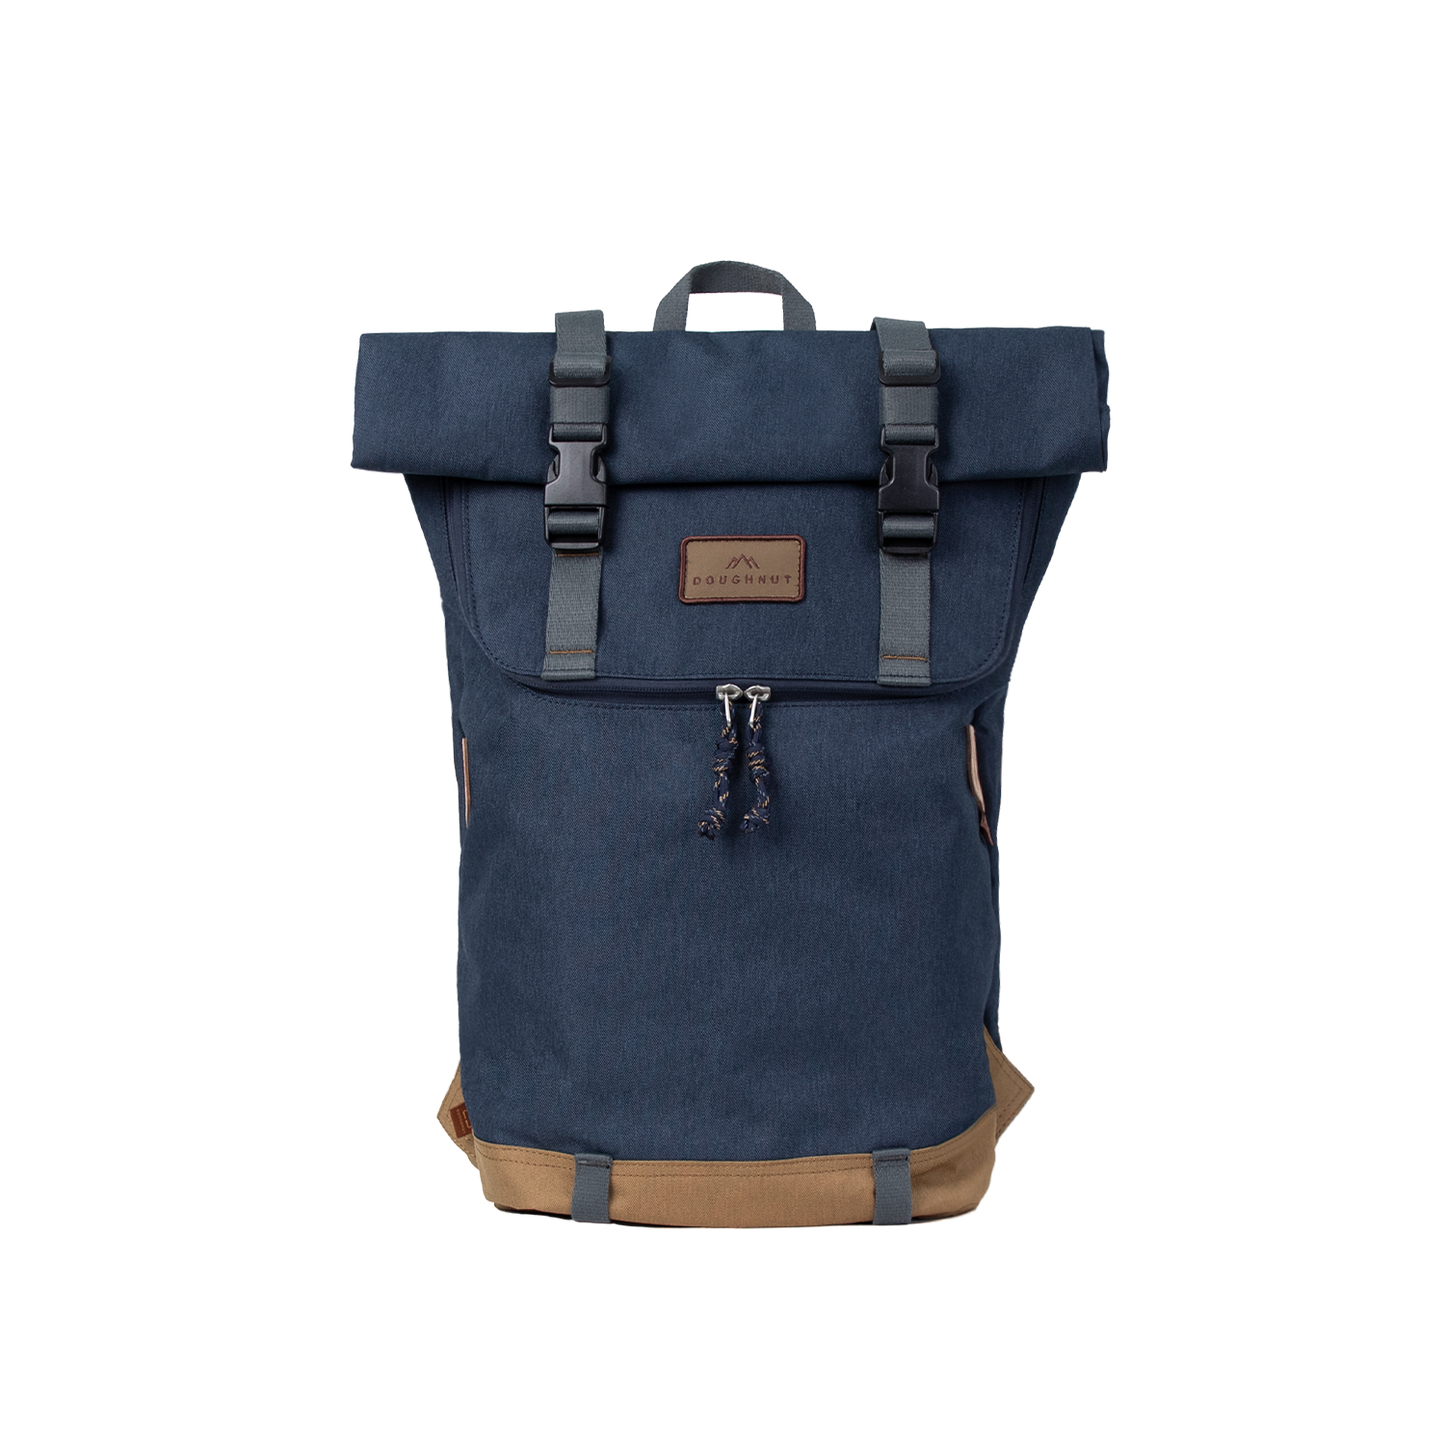 christopher backpack